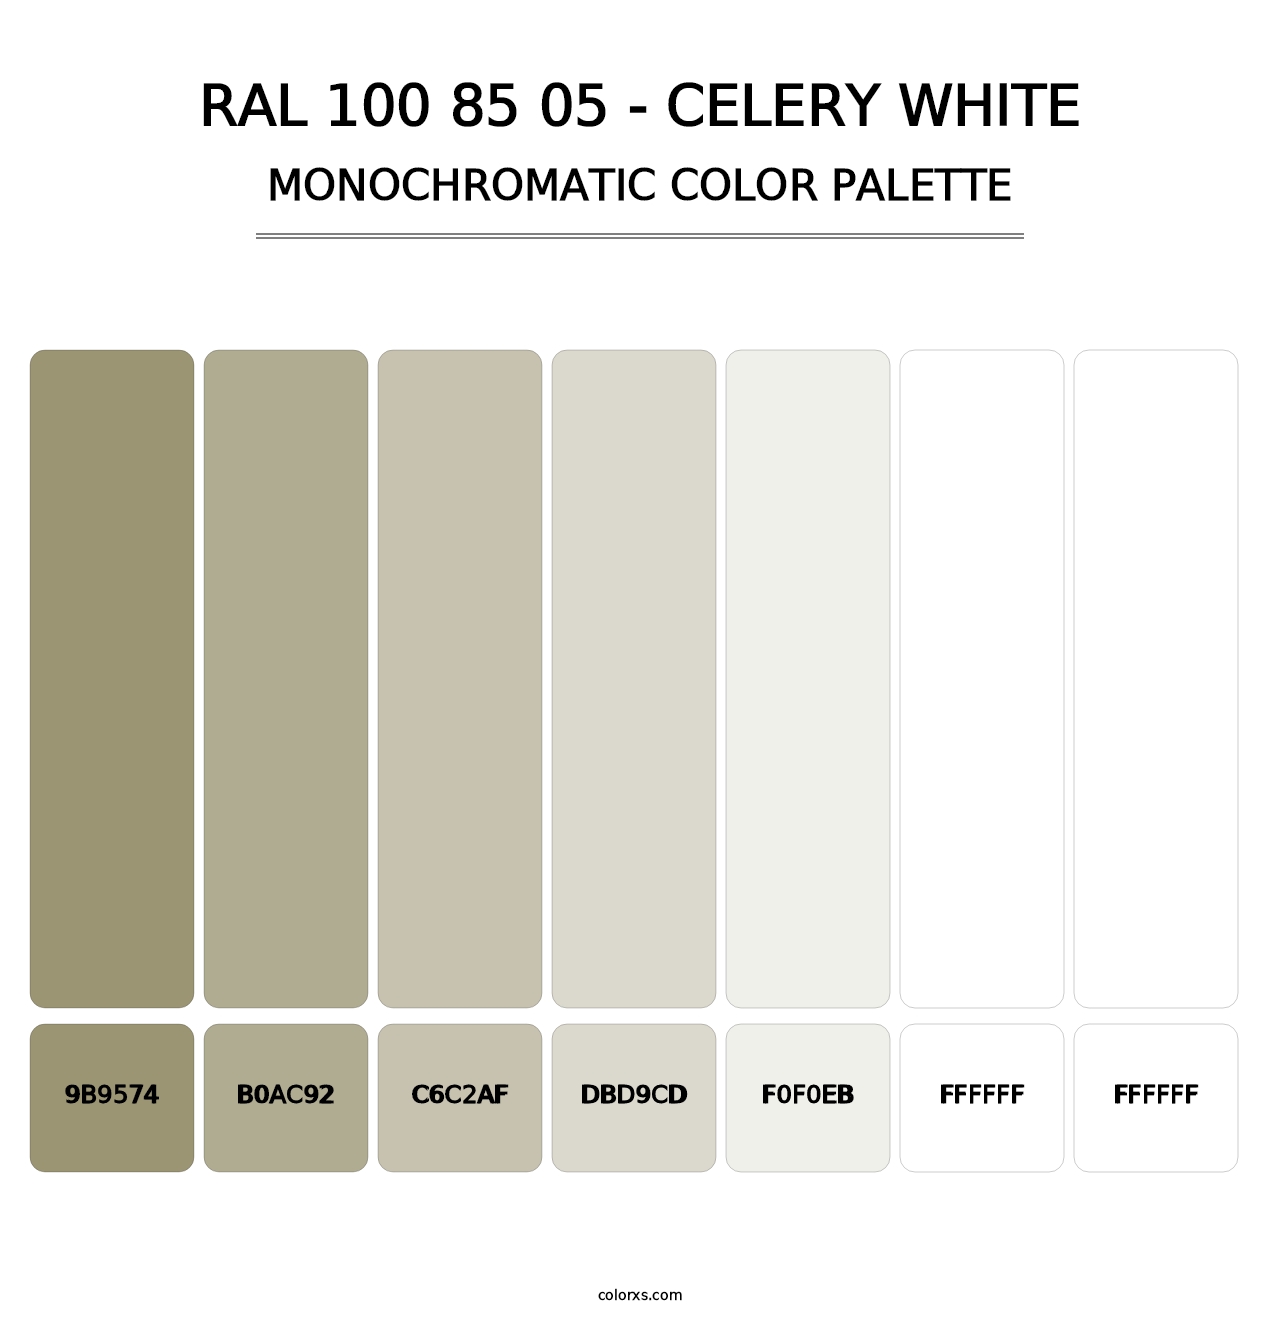 RAL 100 85 05 - Celery White - Monochromatic Color Palette